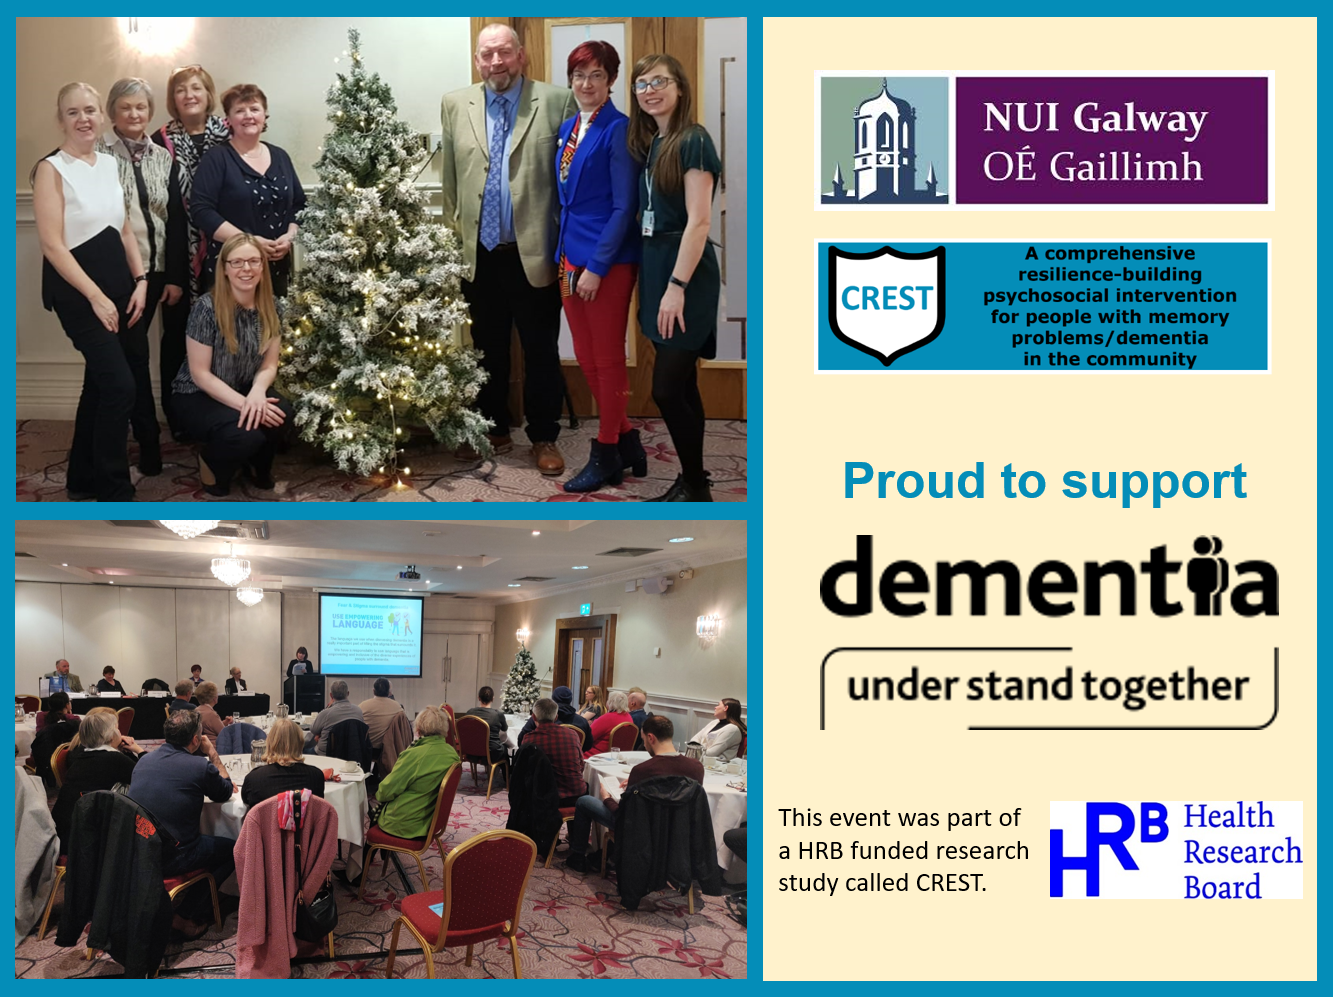 Community Dementia Awareness event